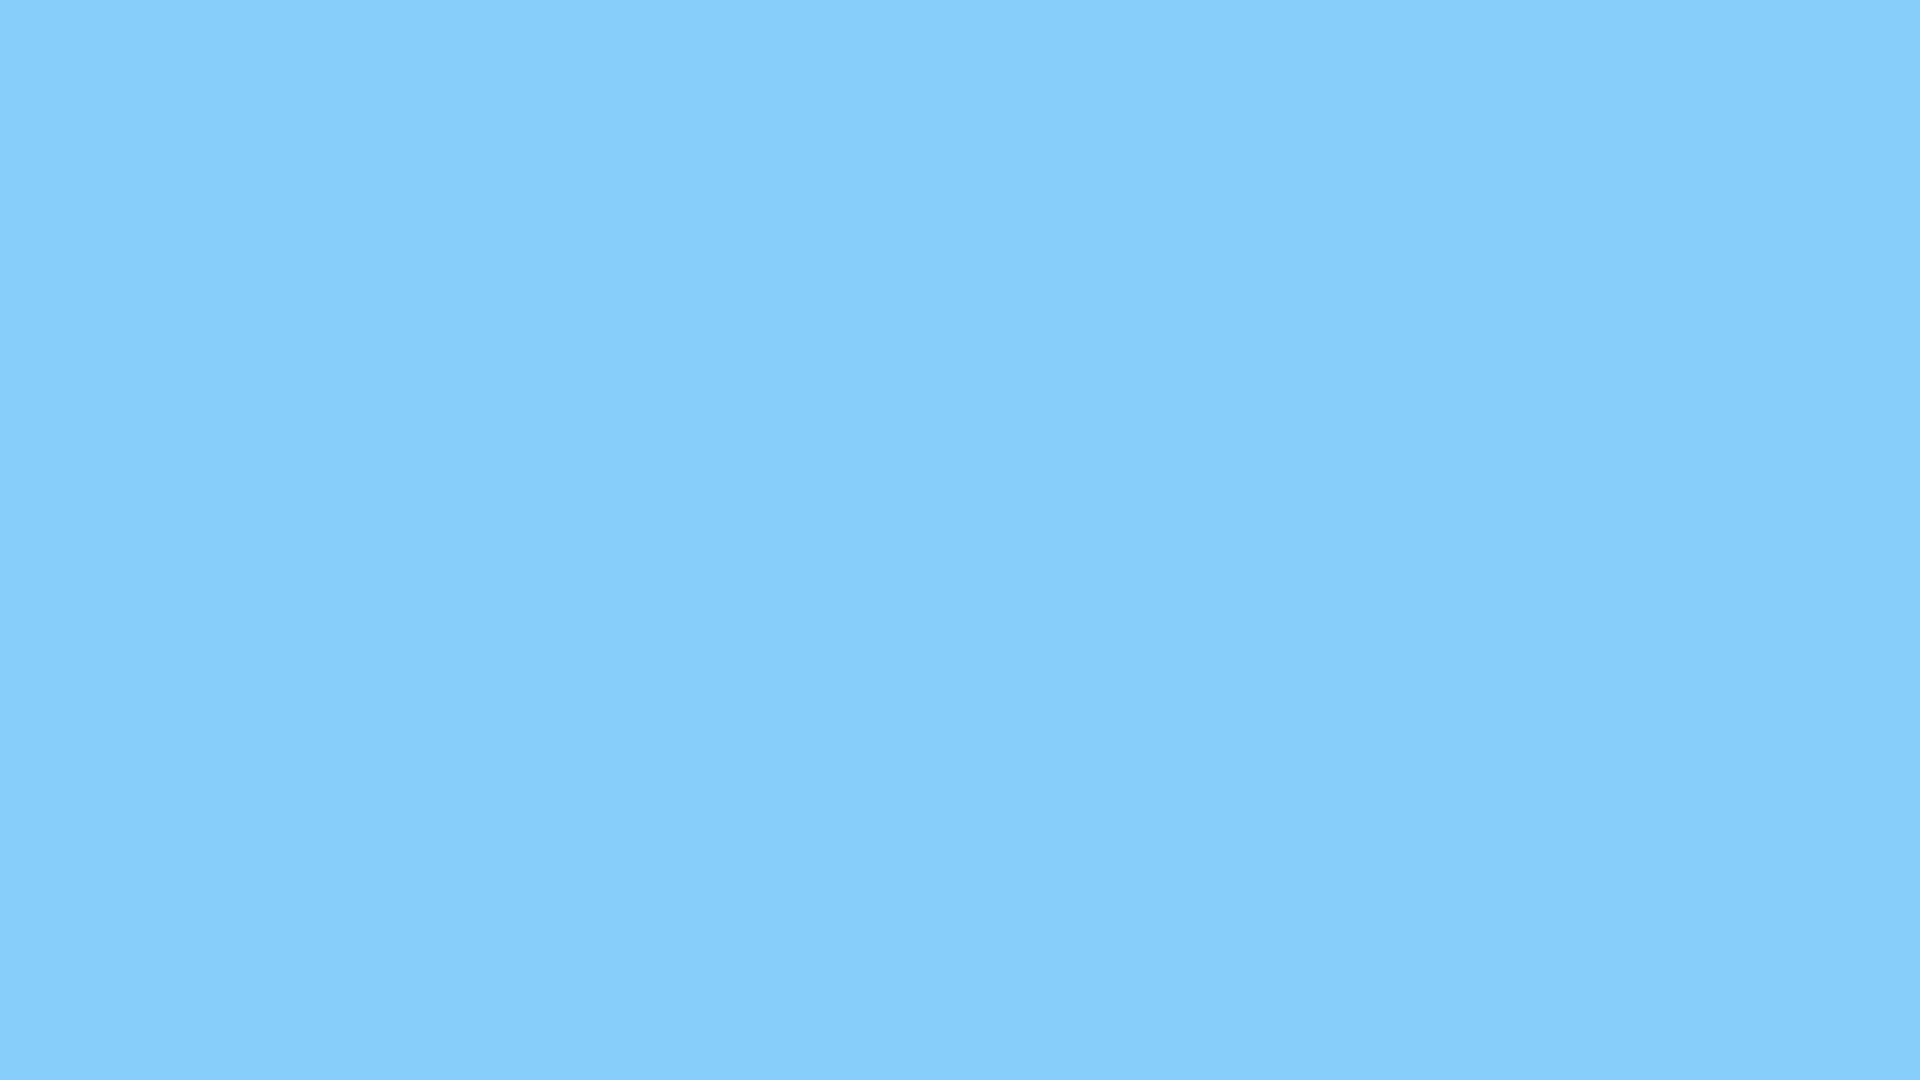 1920x1080 Light Sky Blue Solid Color Background